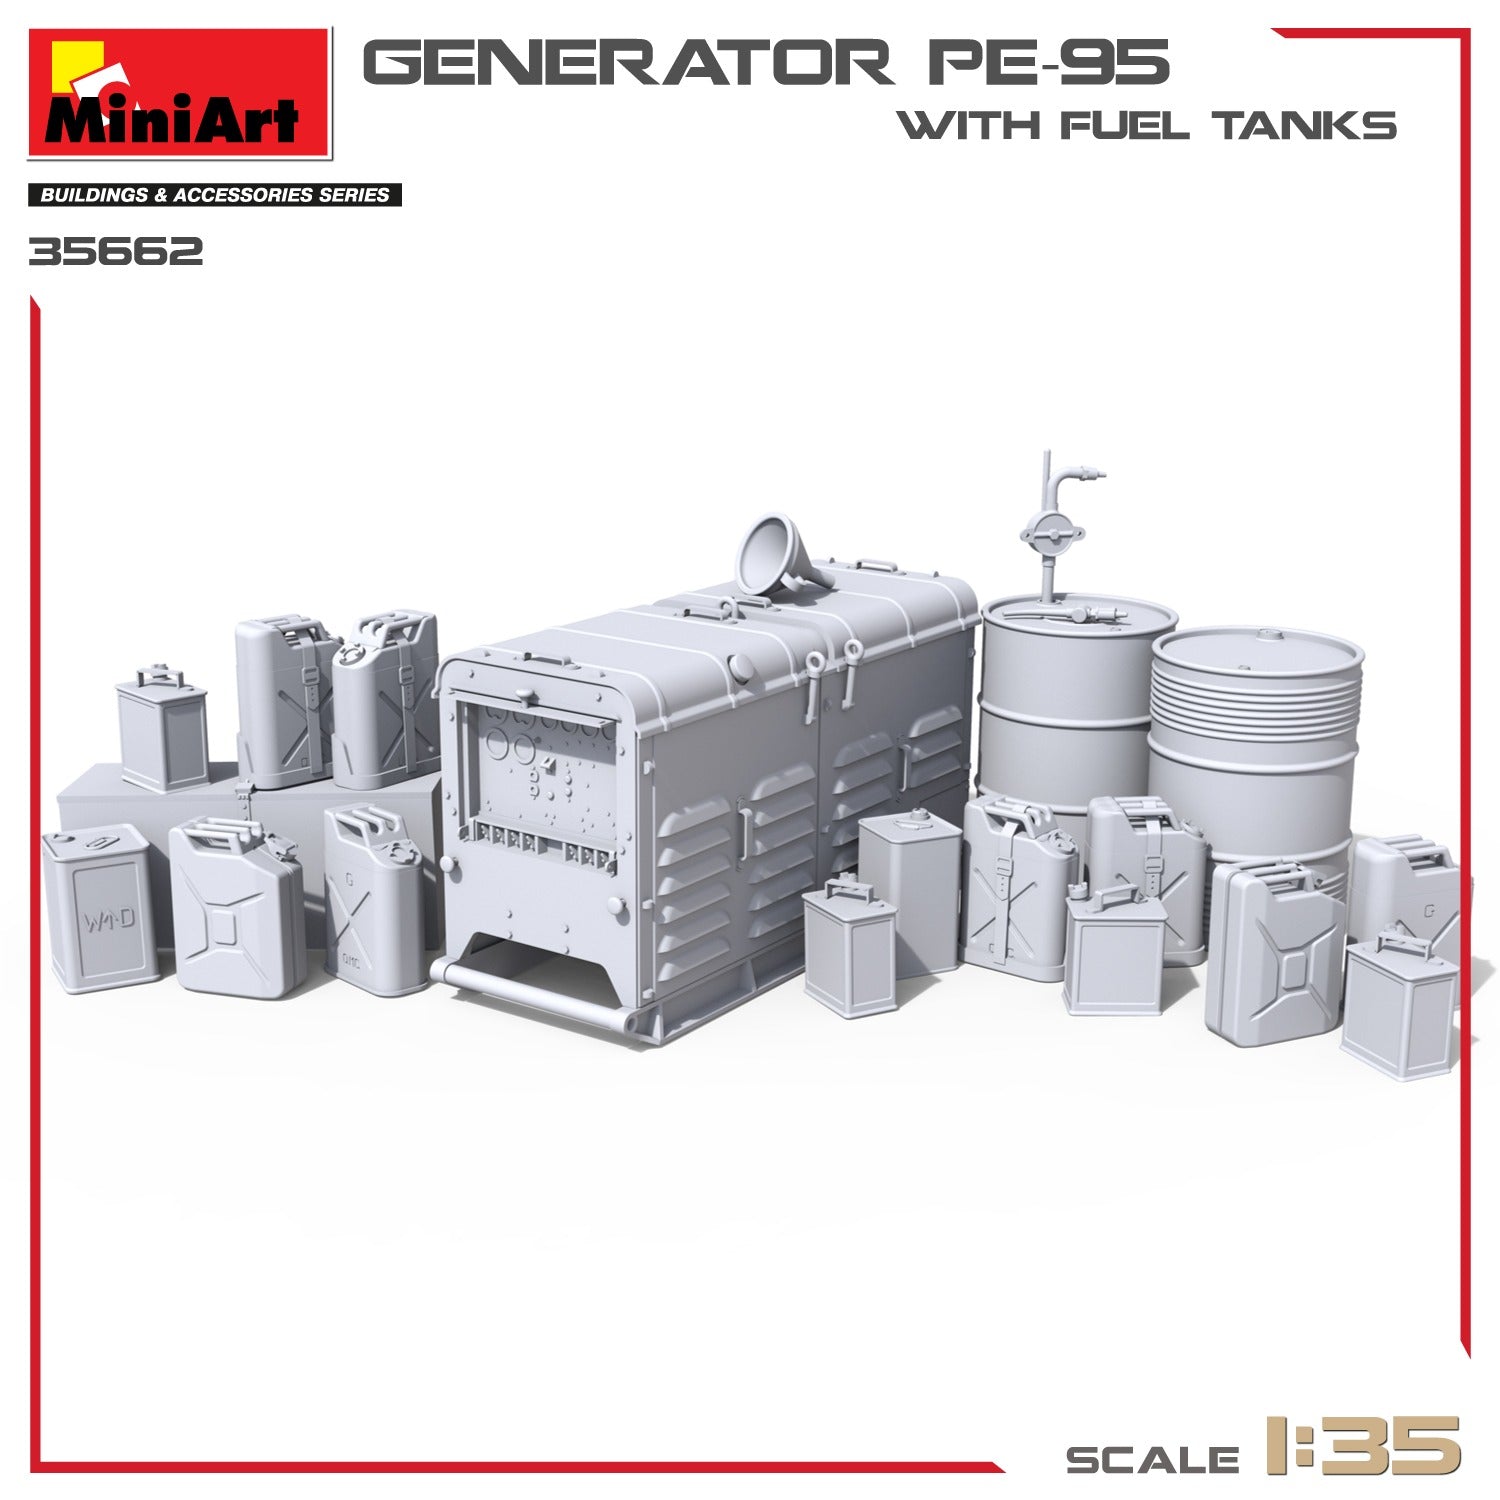 Miniart 1/35 Generator Pe-95 With Fuel Tanks 35662